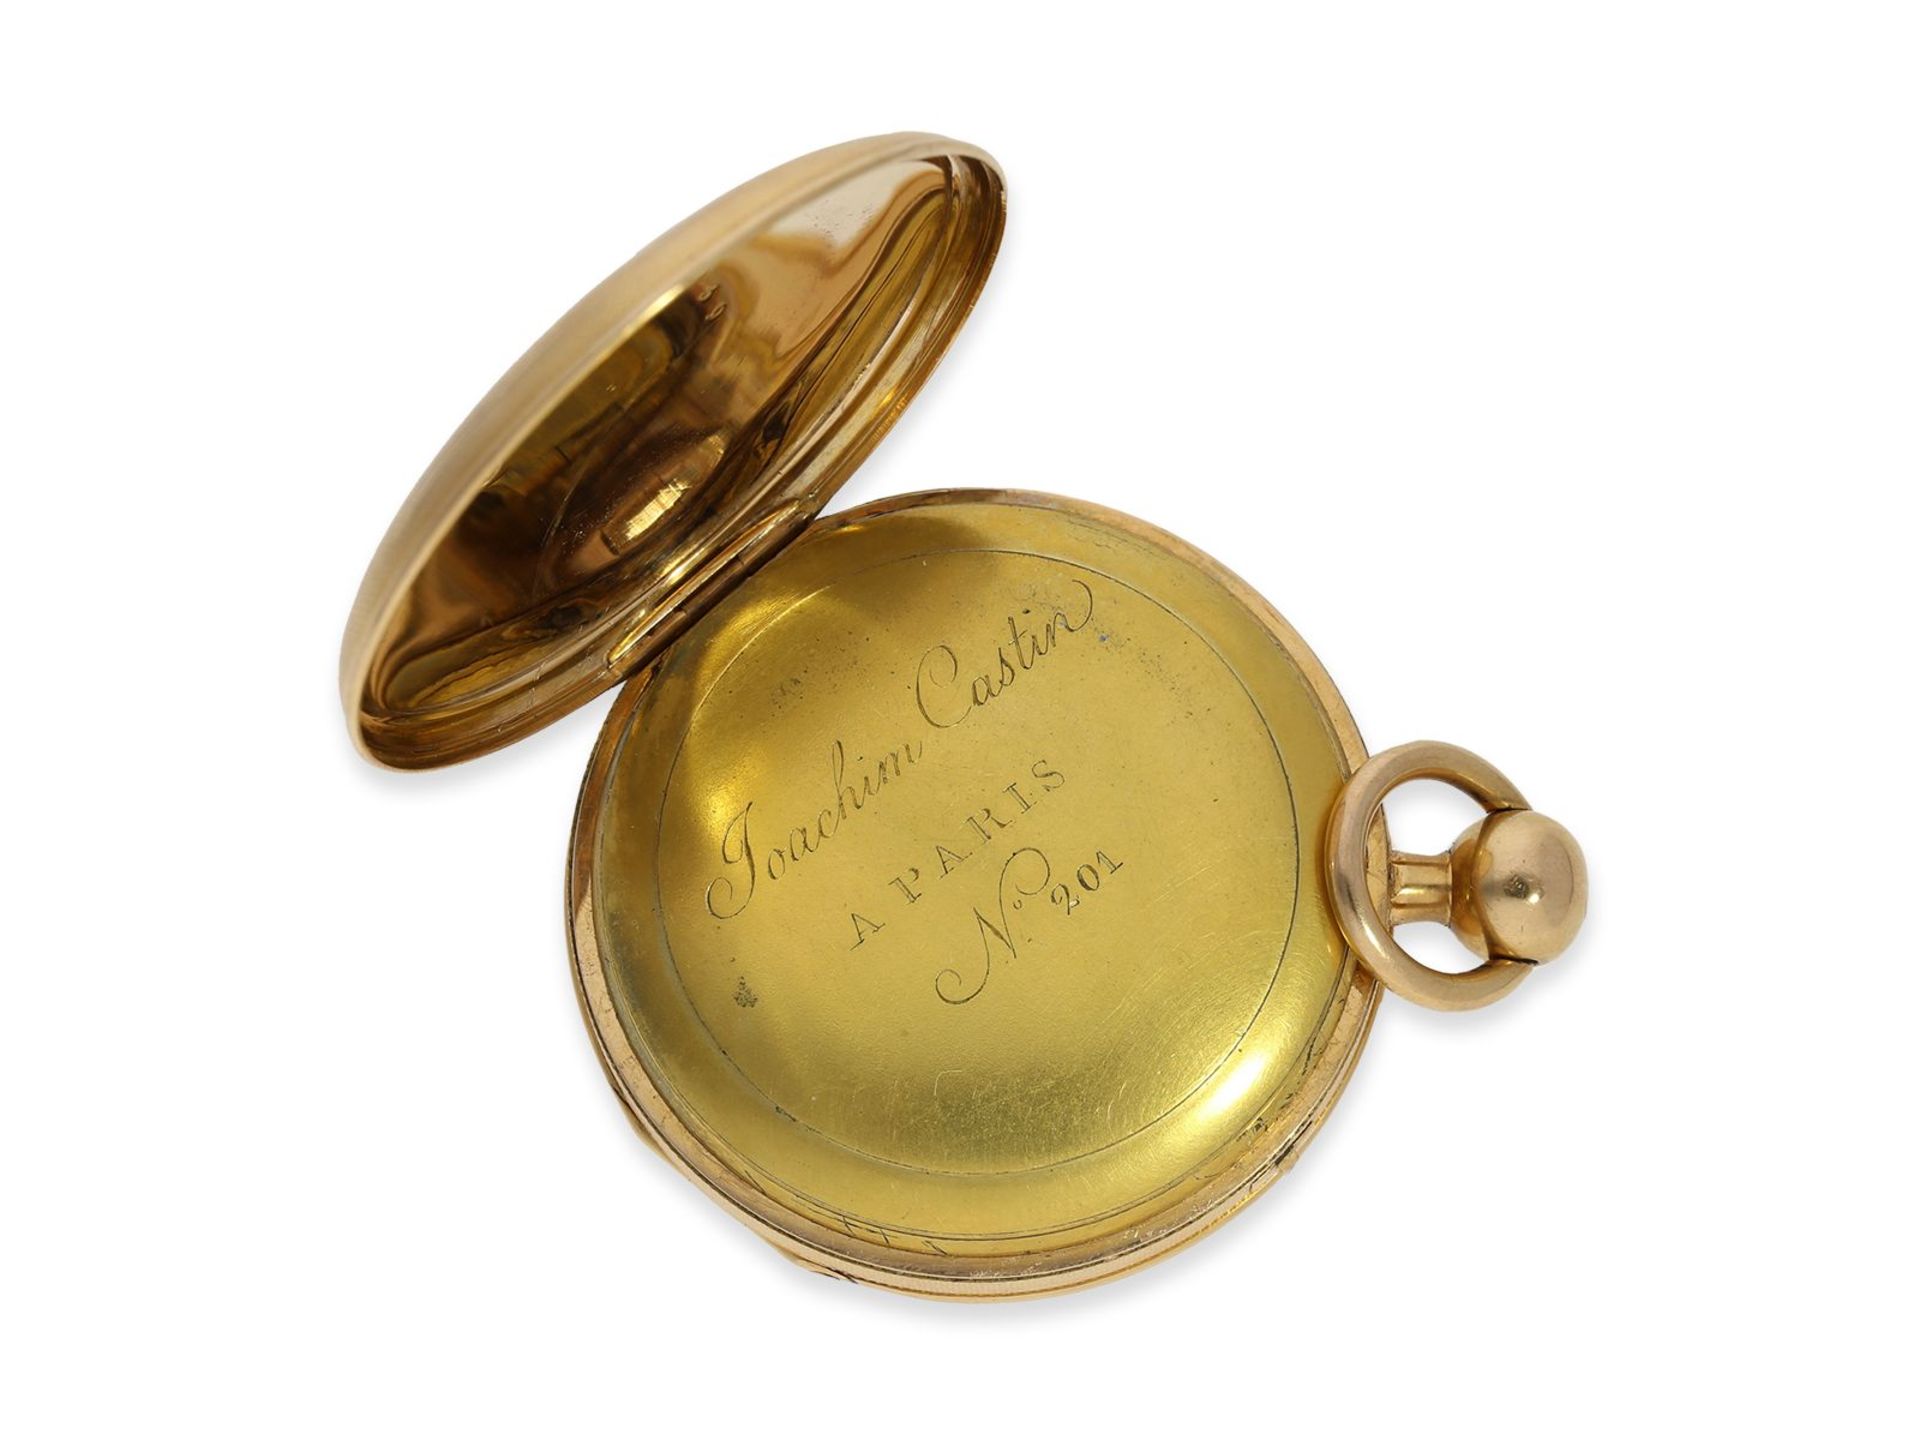 Taschenuhr: goldene Spindeluhr mit Repetition, Paris um 1820, Joachim Castin Paris No. 201 - Bild 7 aus 10